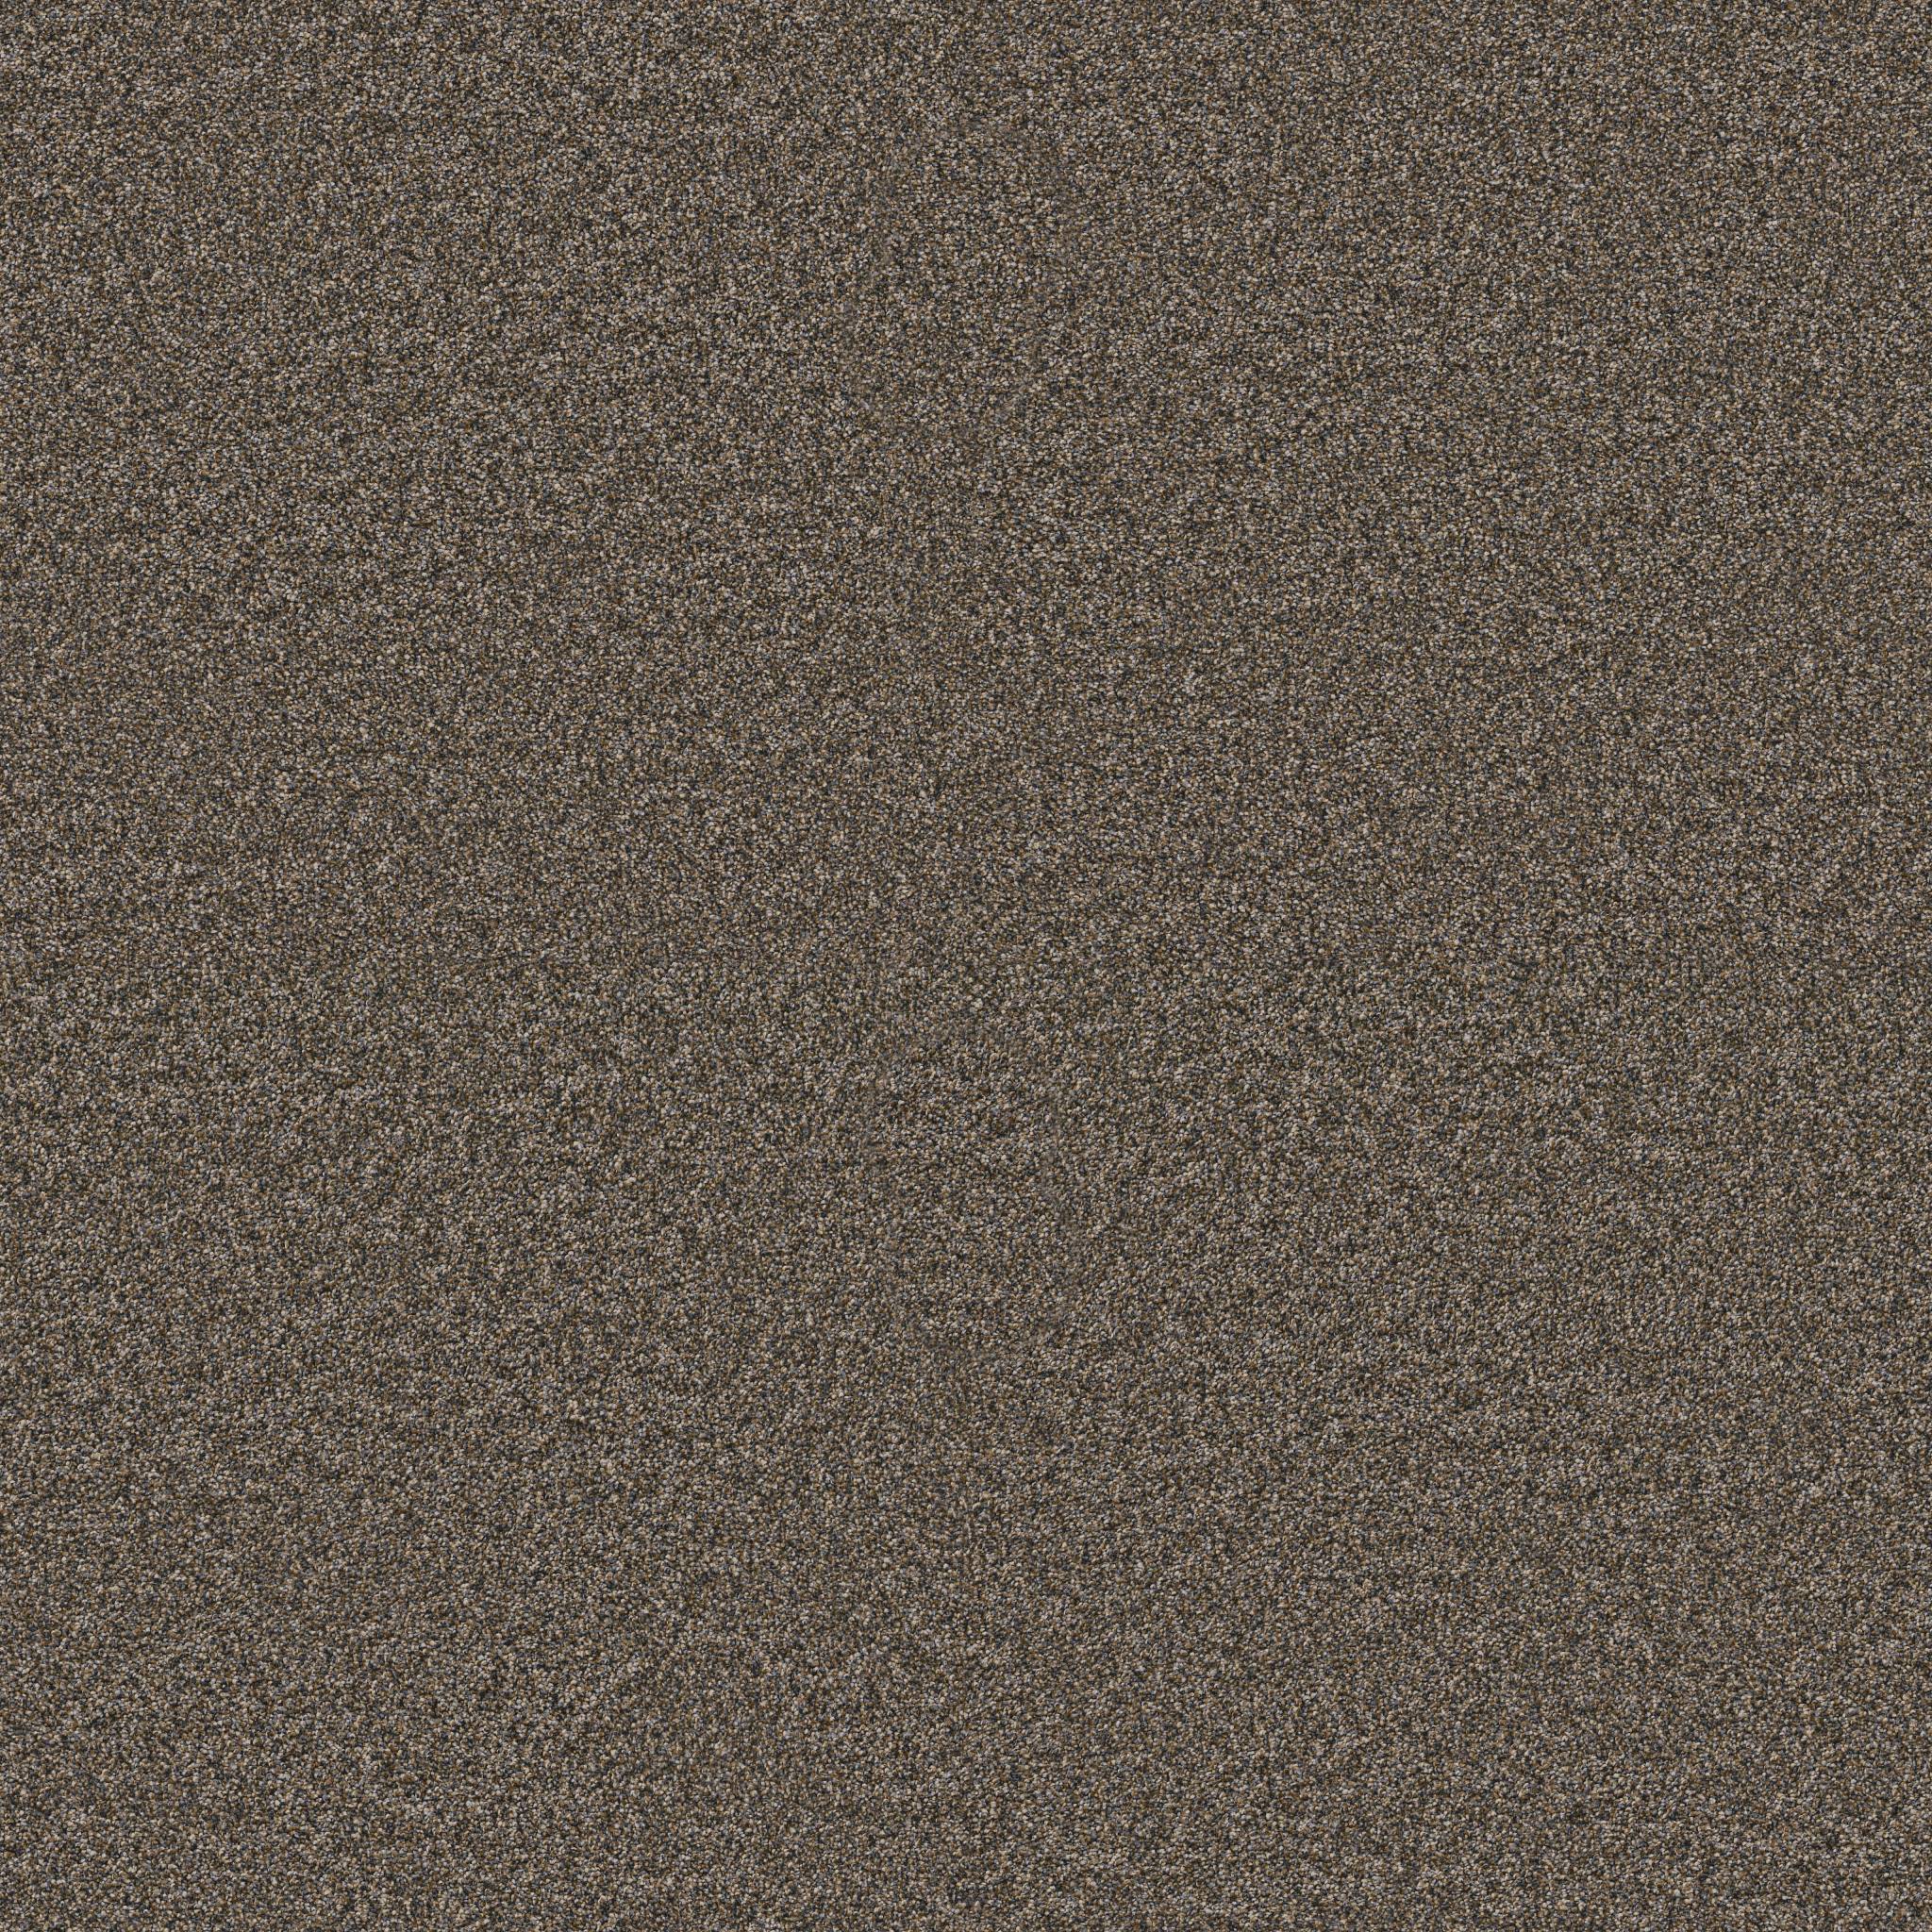 Kaleidoscope Carpet - Amber Crystal Zoomed Swatch Image